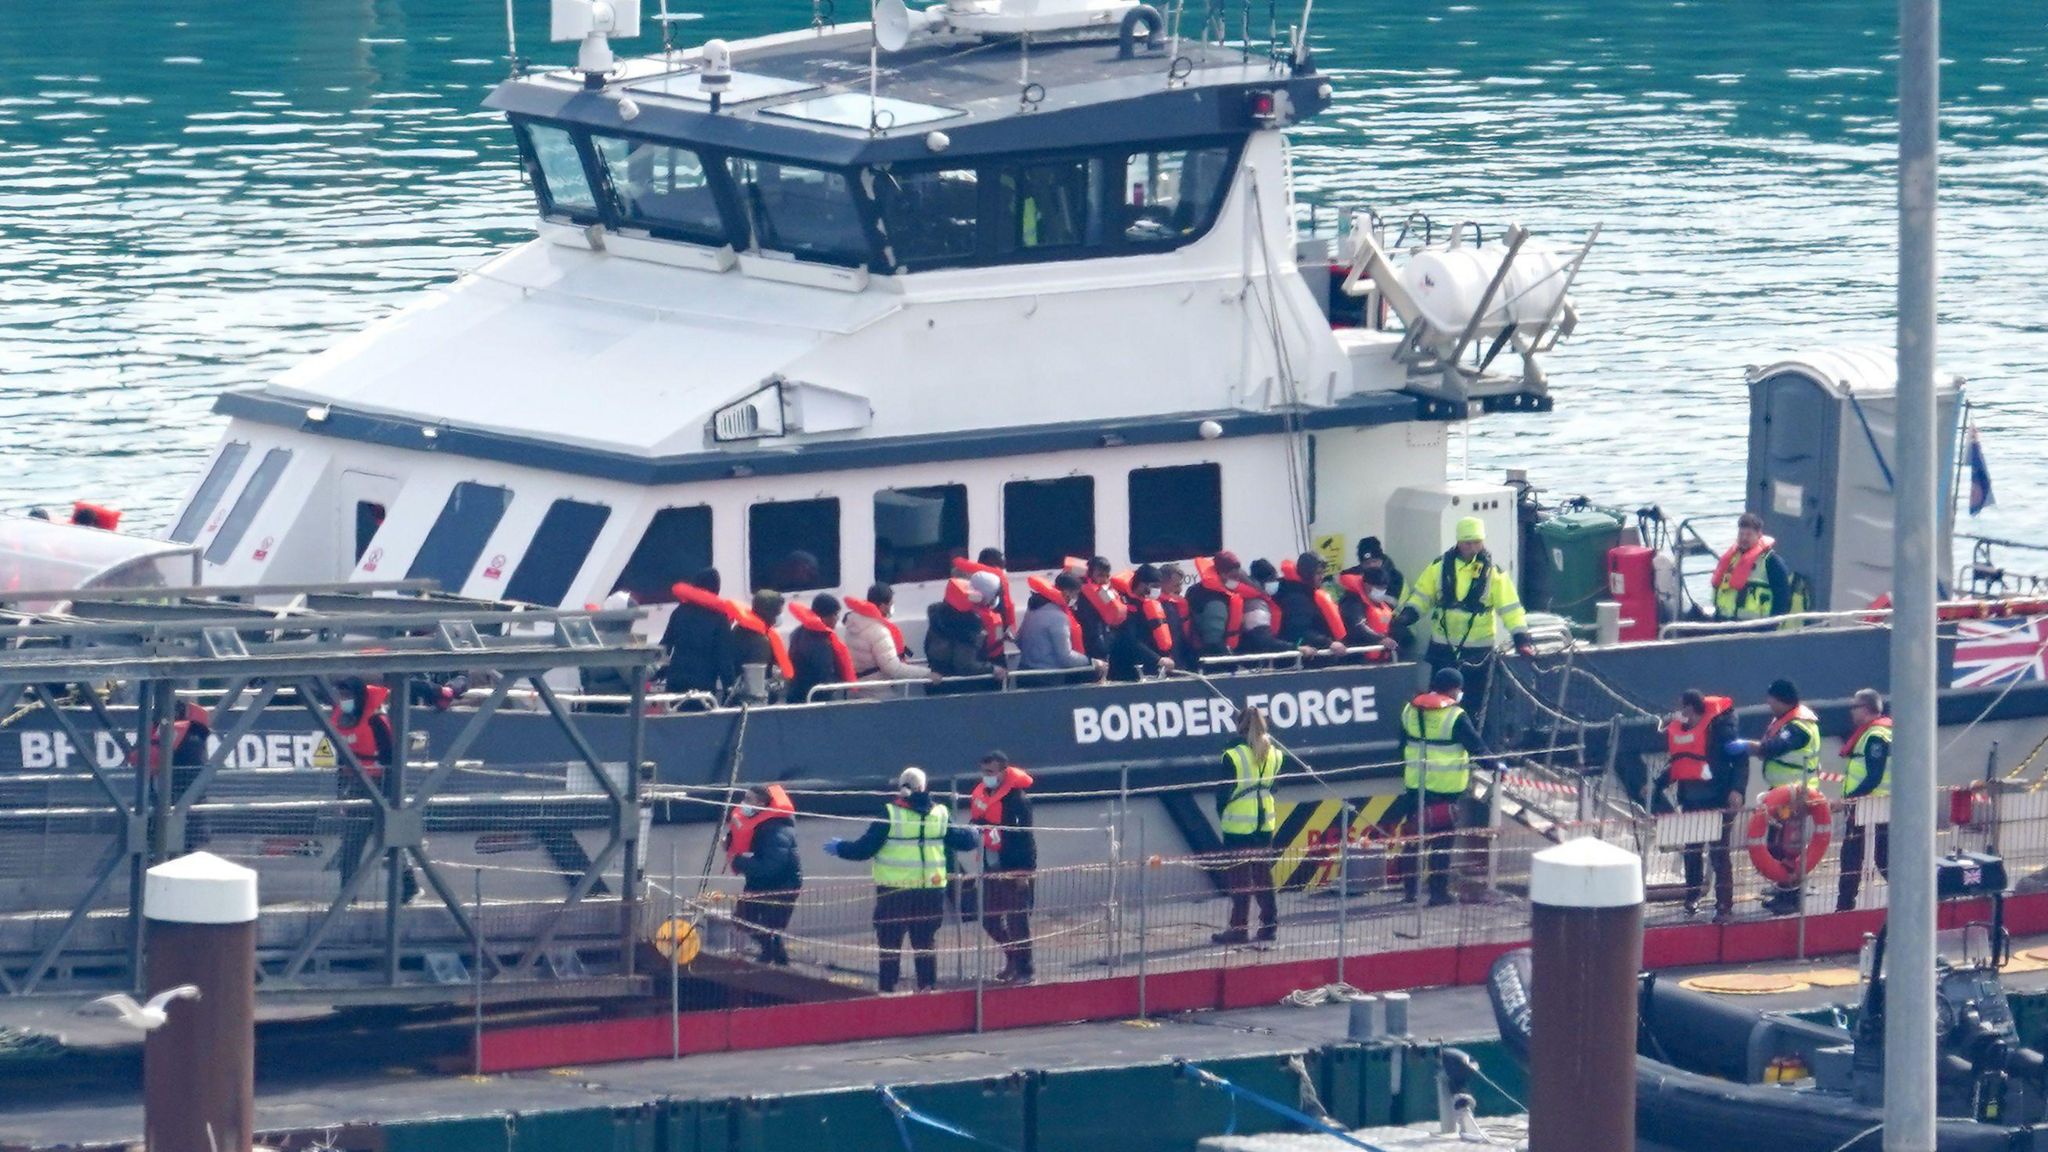 Migrants disembark a border force boat in Dover